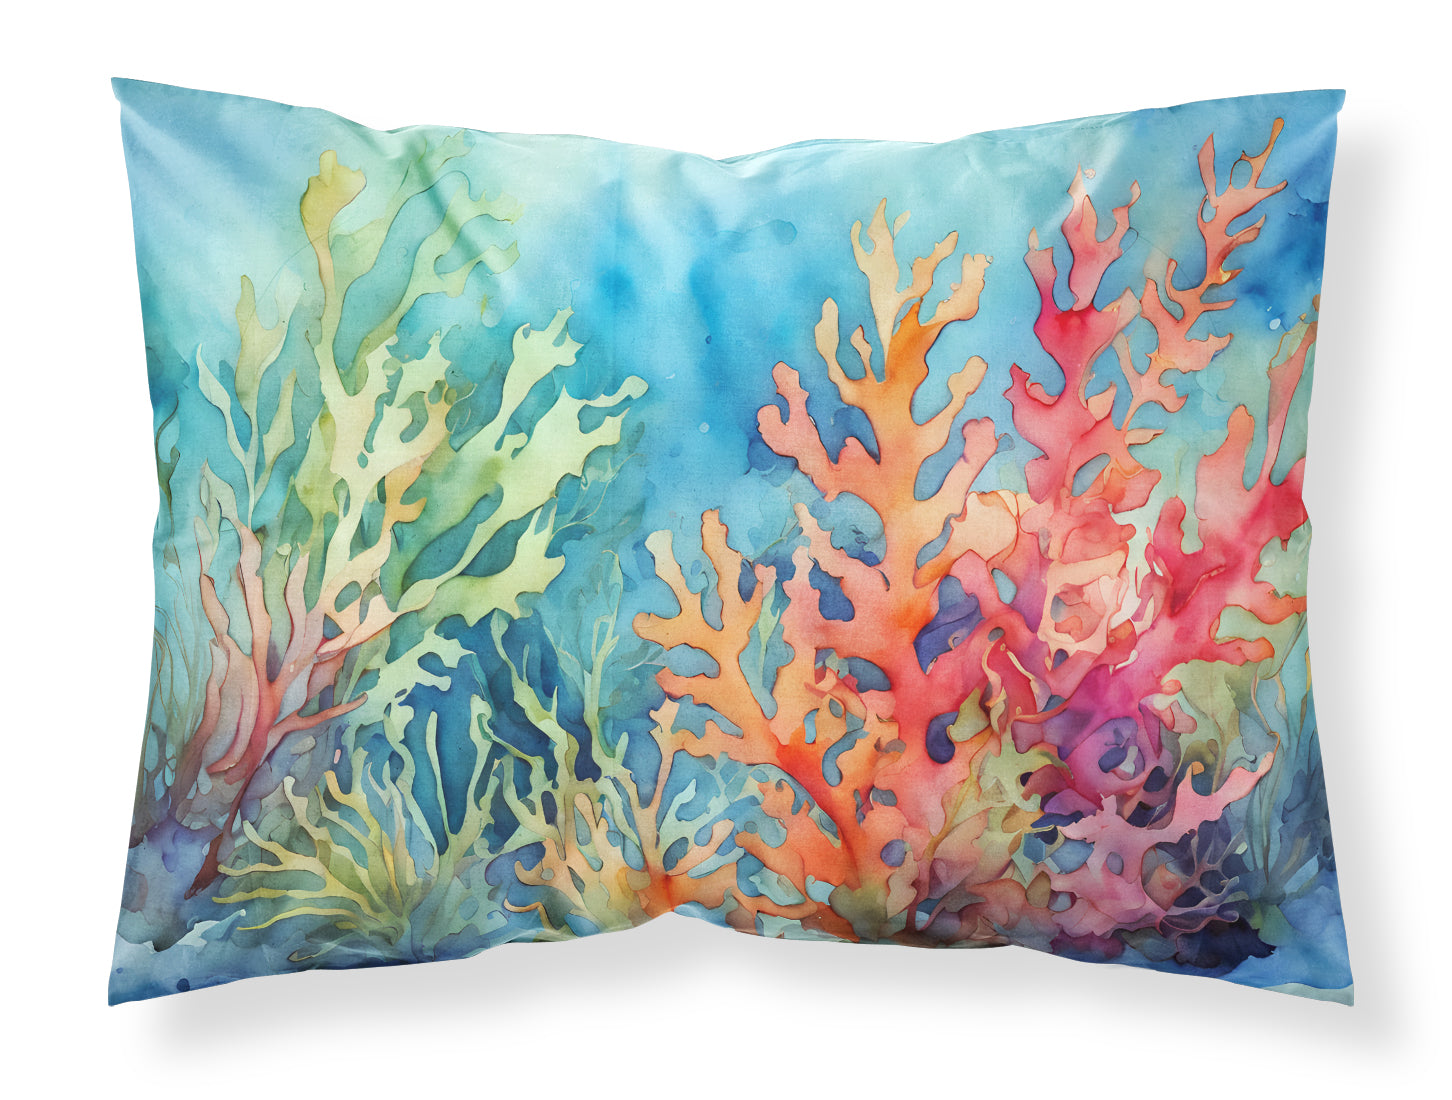 Buy this Seaweed Standard Pillowcase